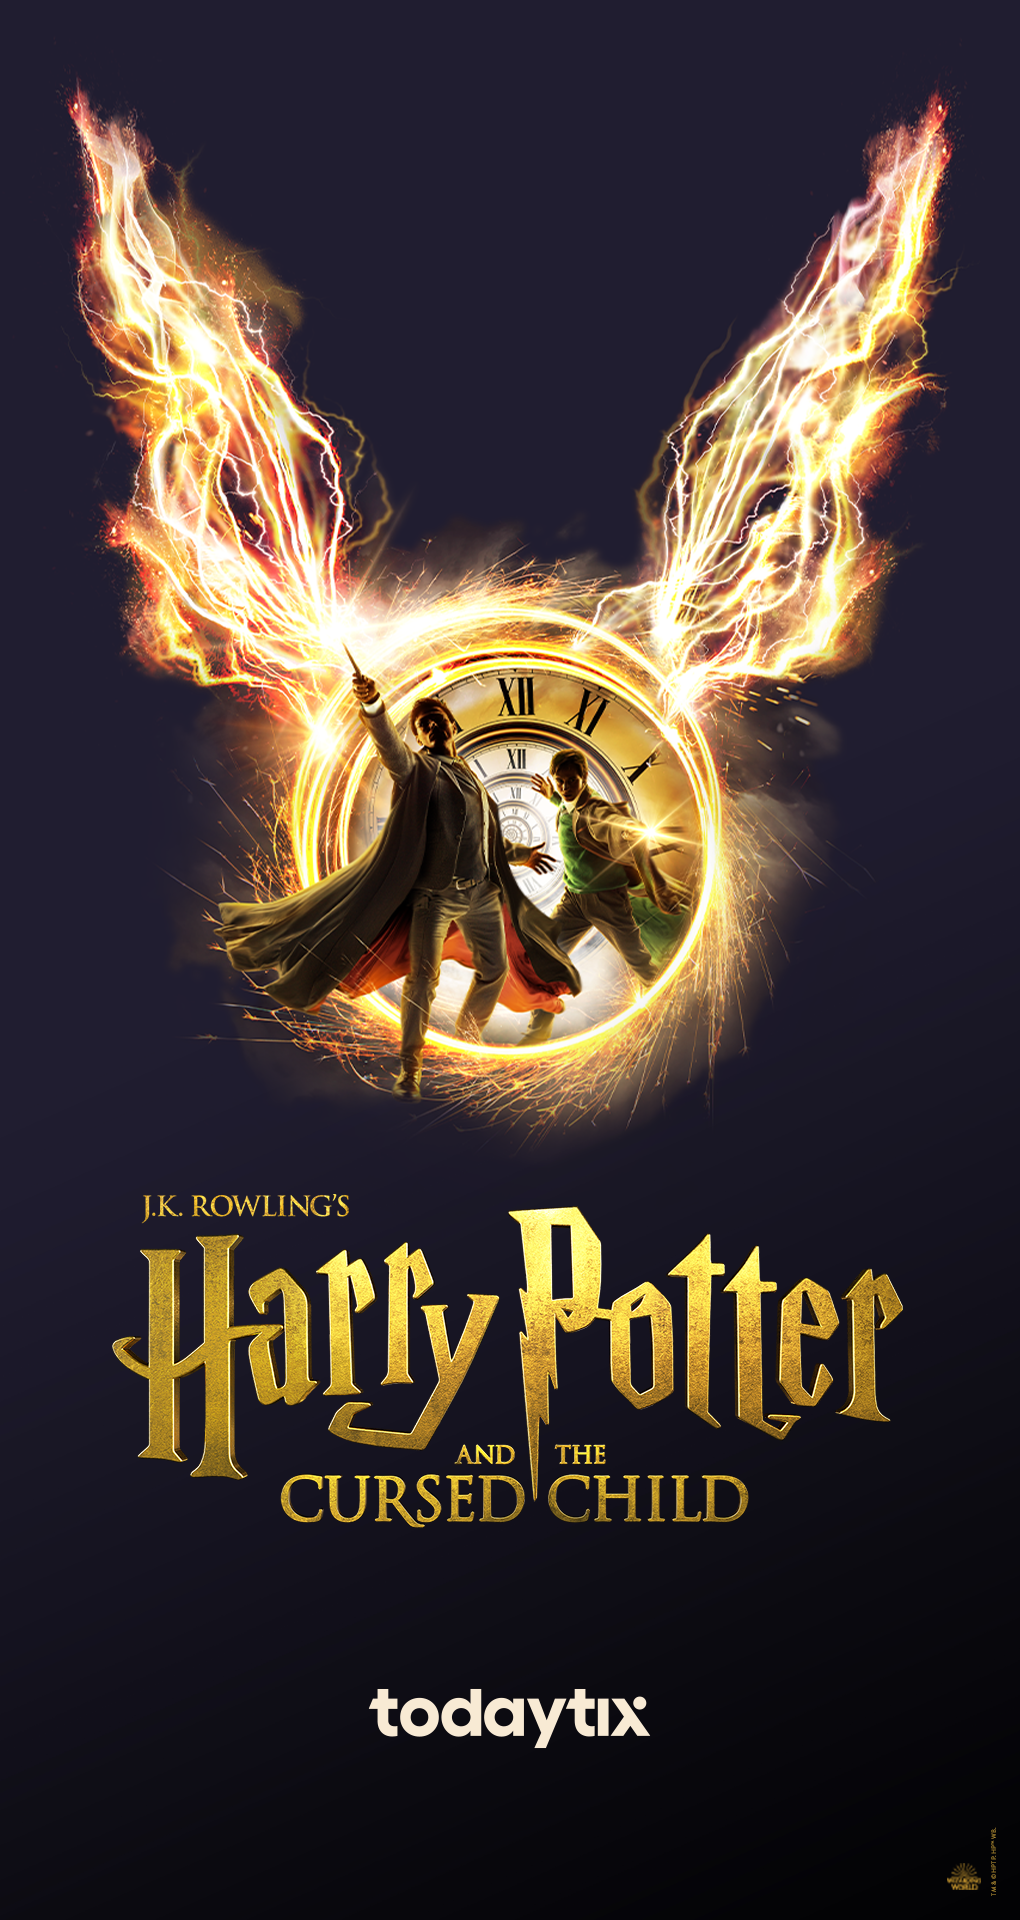 kreupel Gemaakt om te onthouden Machu Picchu Harry Potter and the Cursed Child on Broadway Tickets | New York | TodayTix